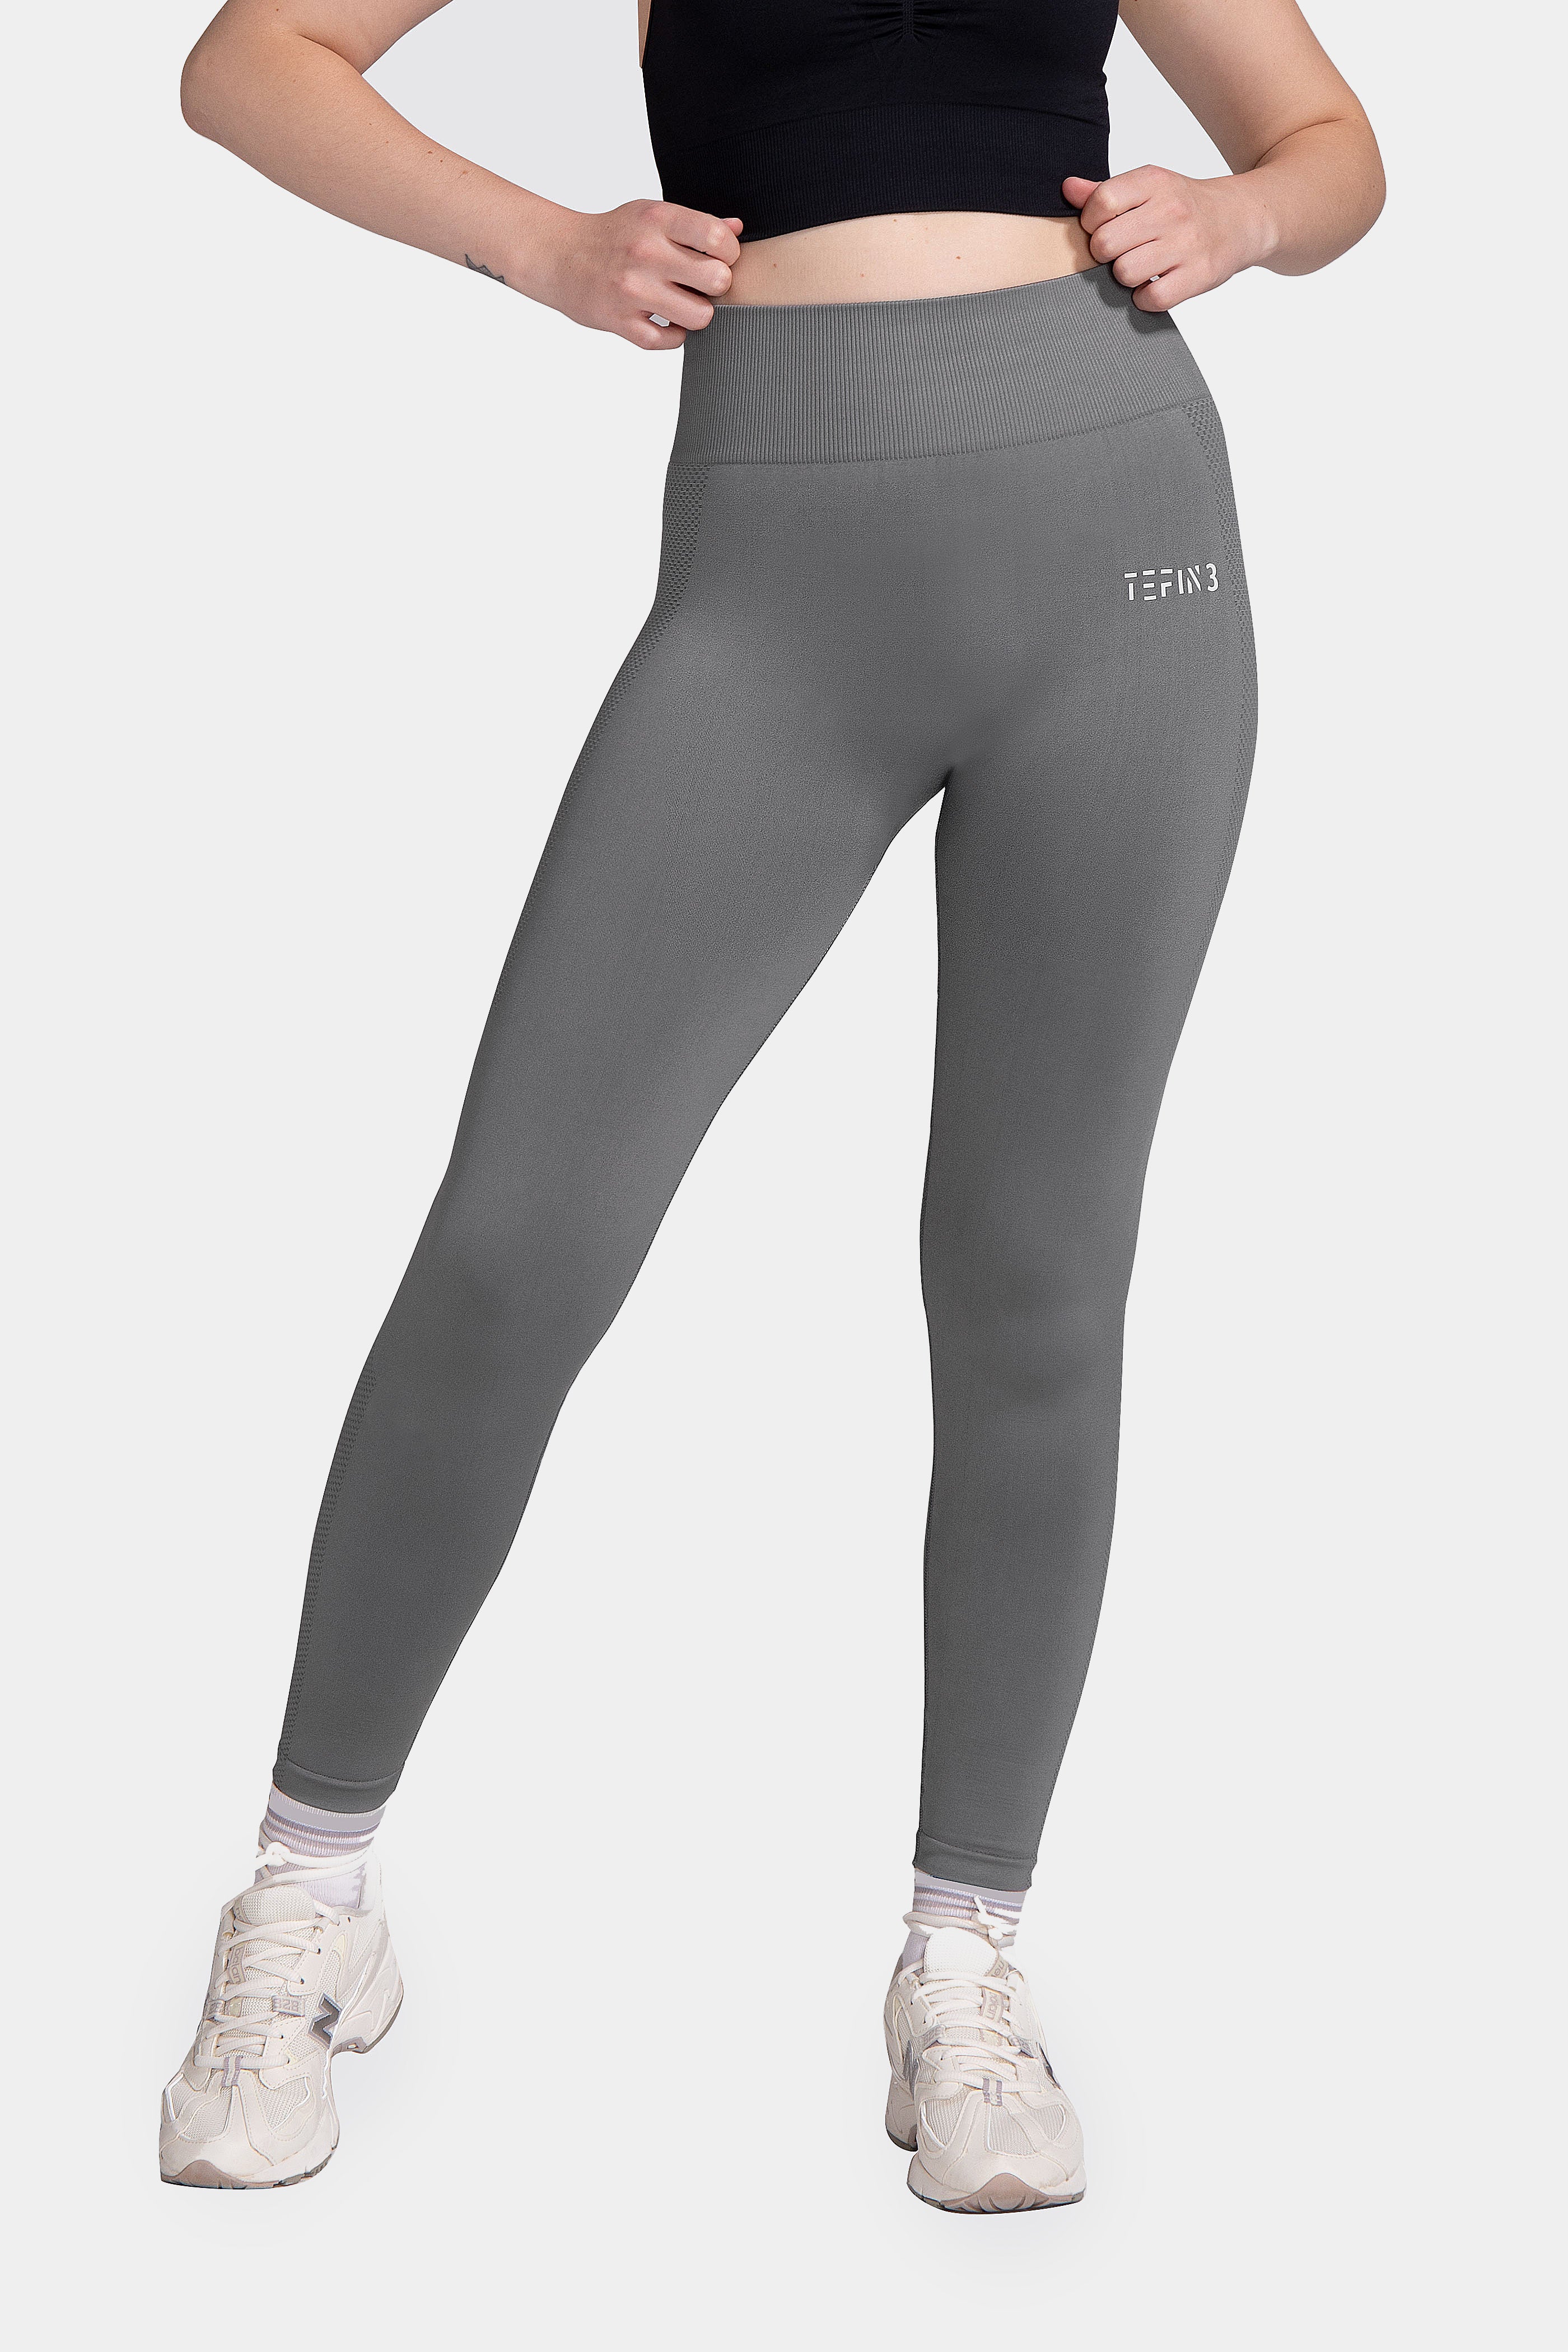 TEFIN3 Comfy Seamless Grey - Women Workout Leggings